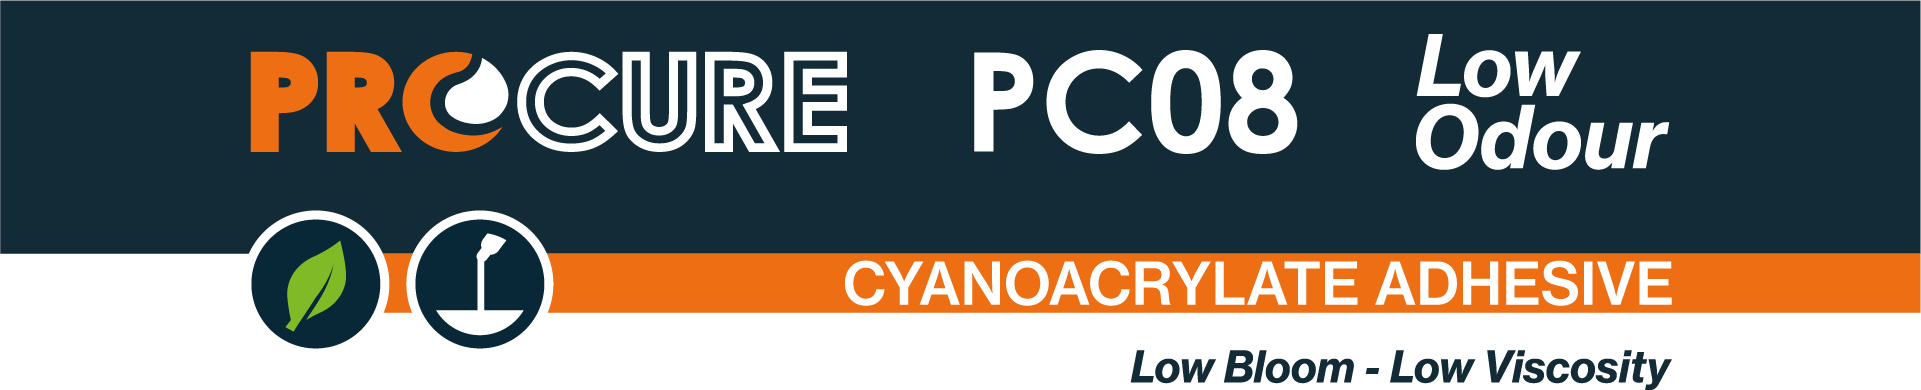 Procure PC08 Cyanoacrylate Adhesive Banner Image.